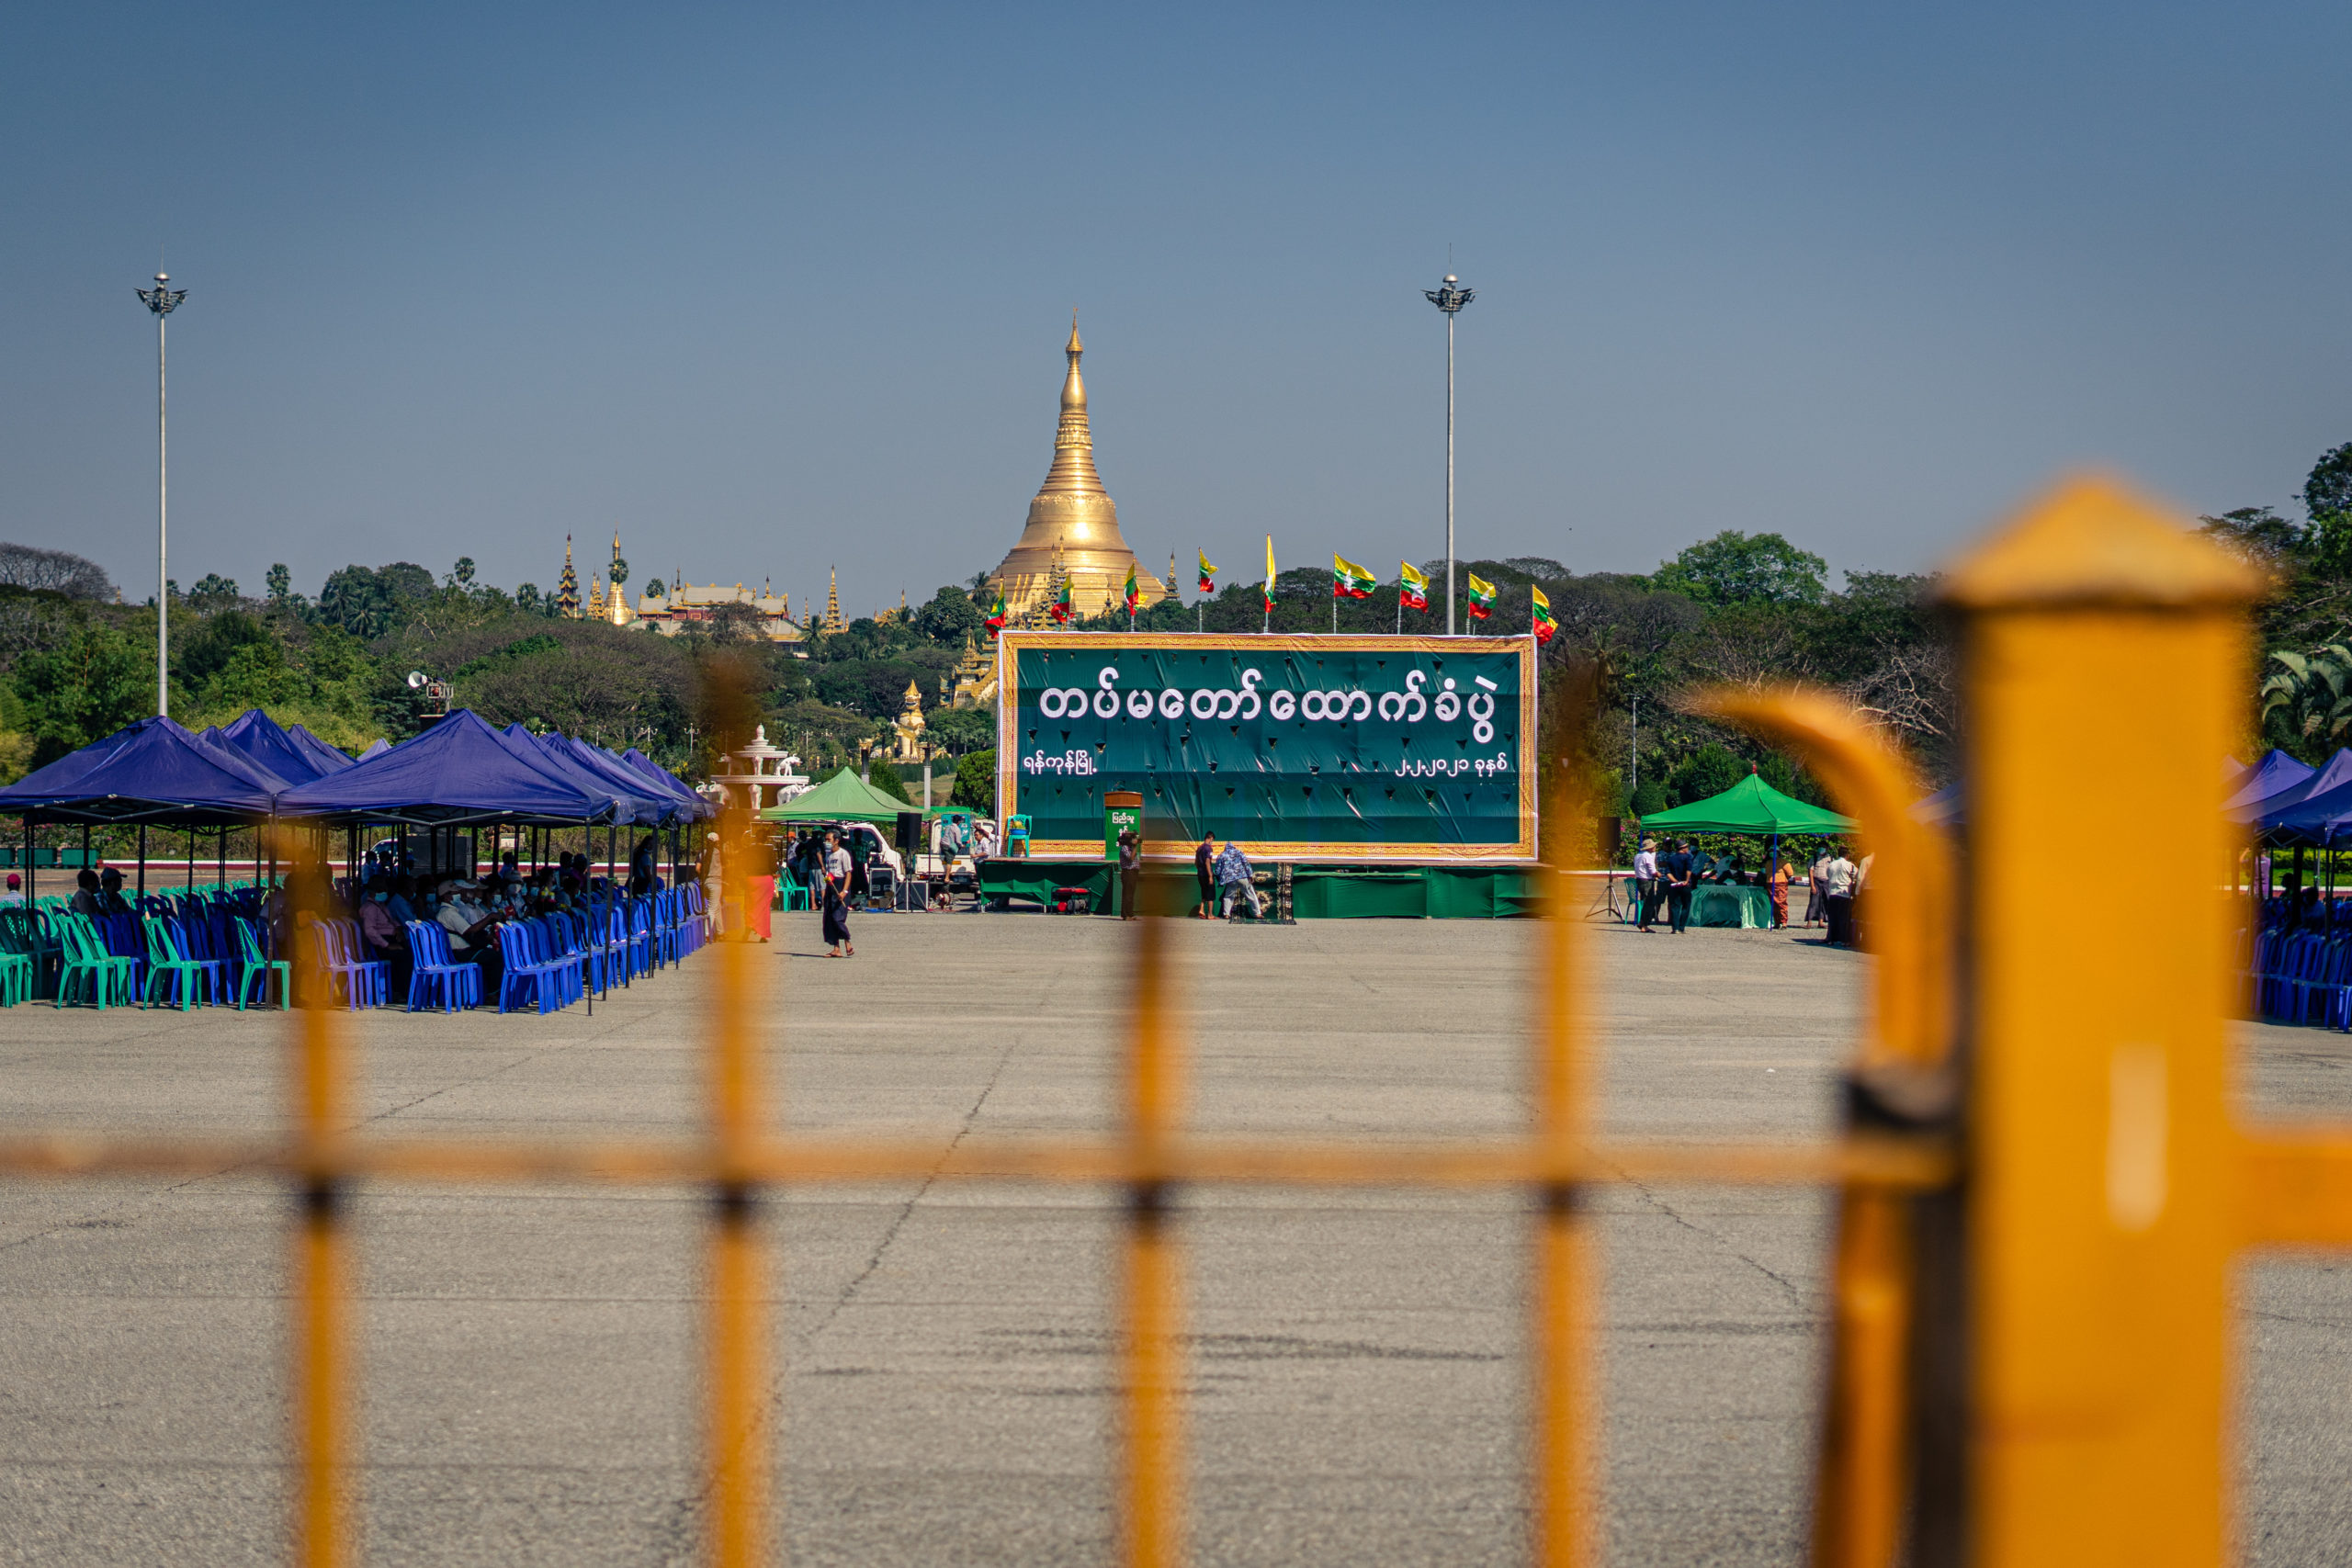 Myanmar turmoil threatens digital economy, say experts